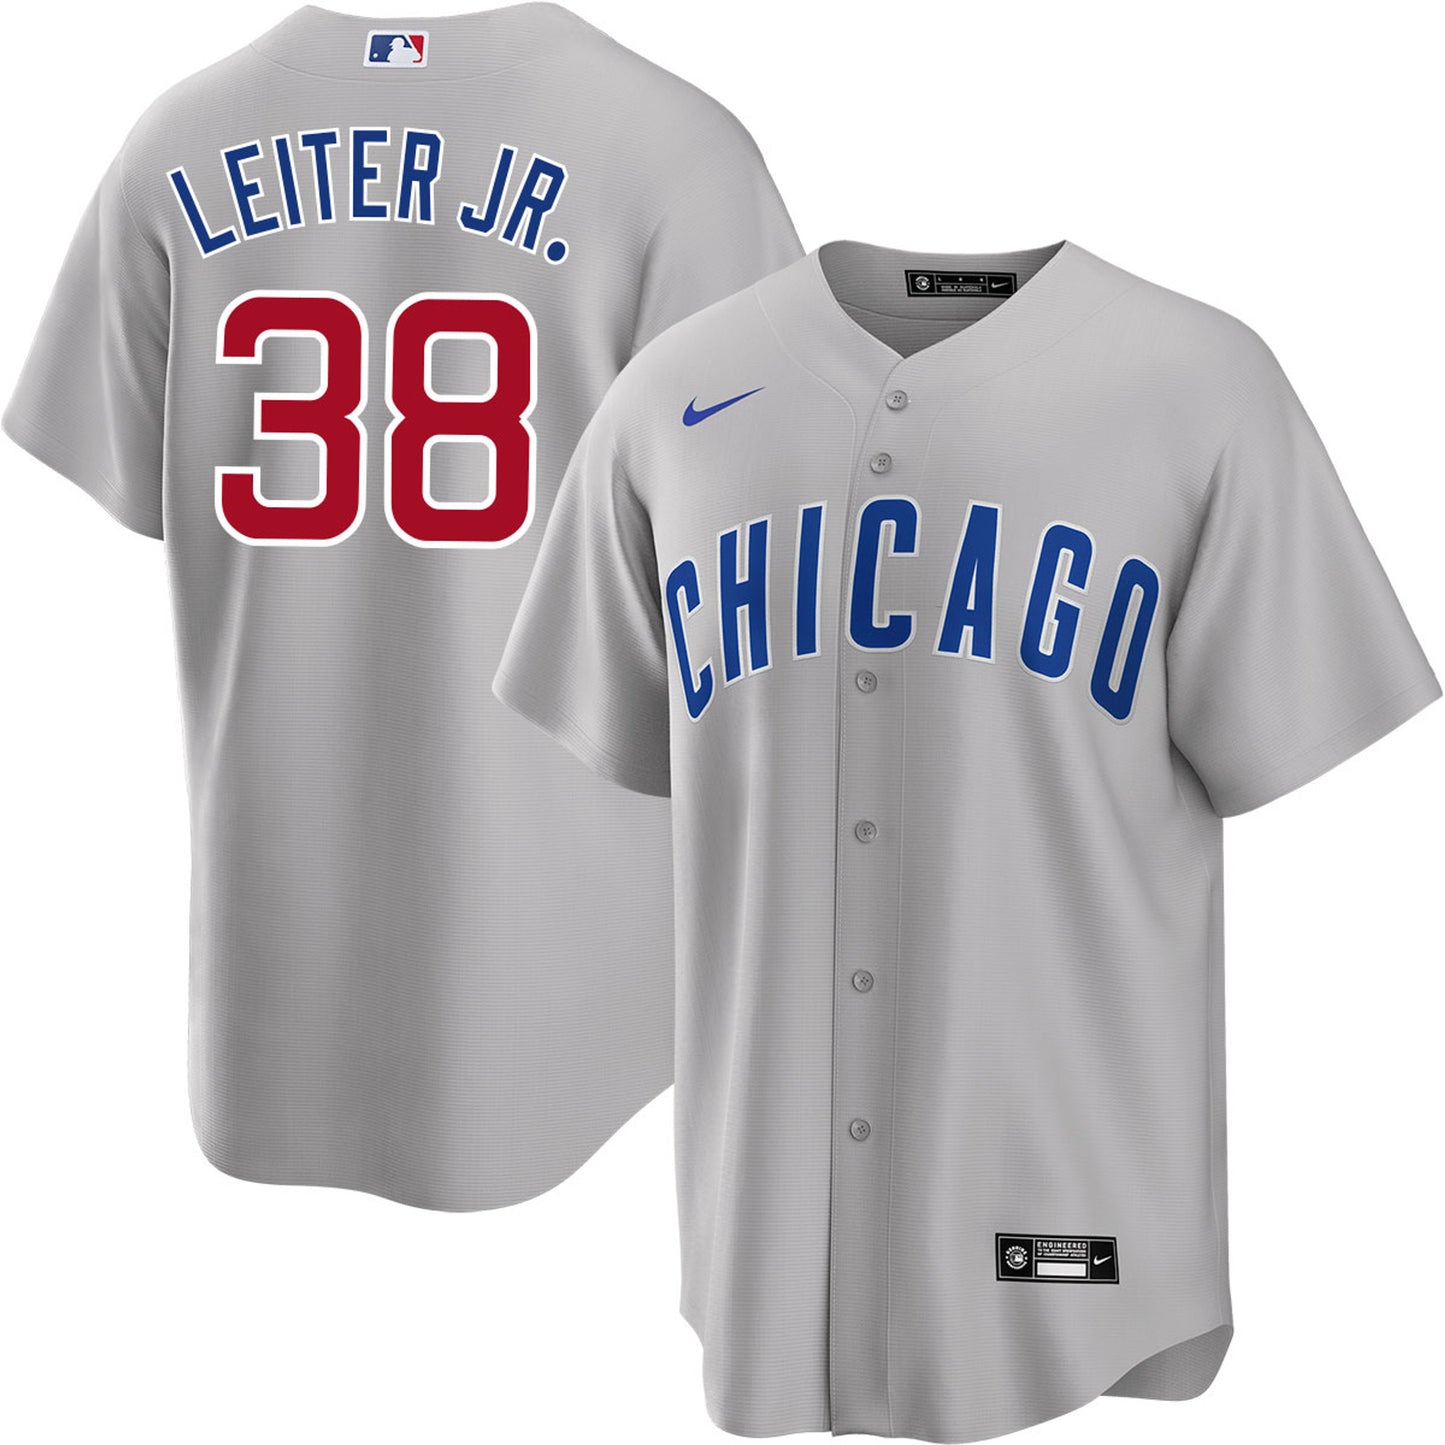 Men's  Chicago Cubs Mark Leiter Player Jersey